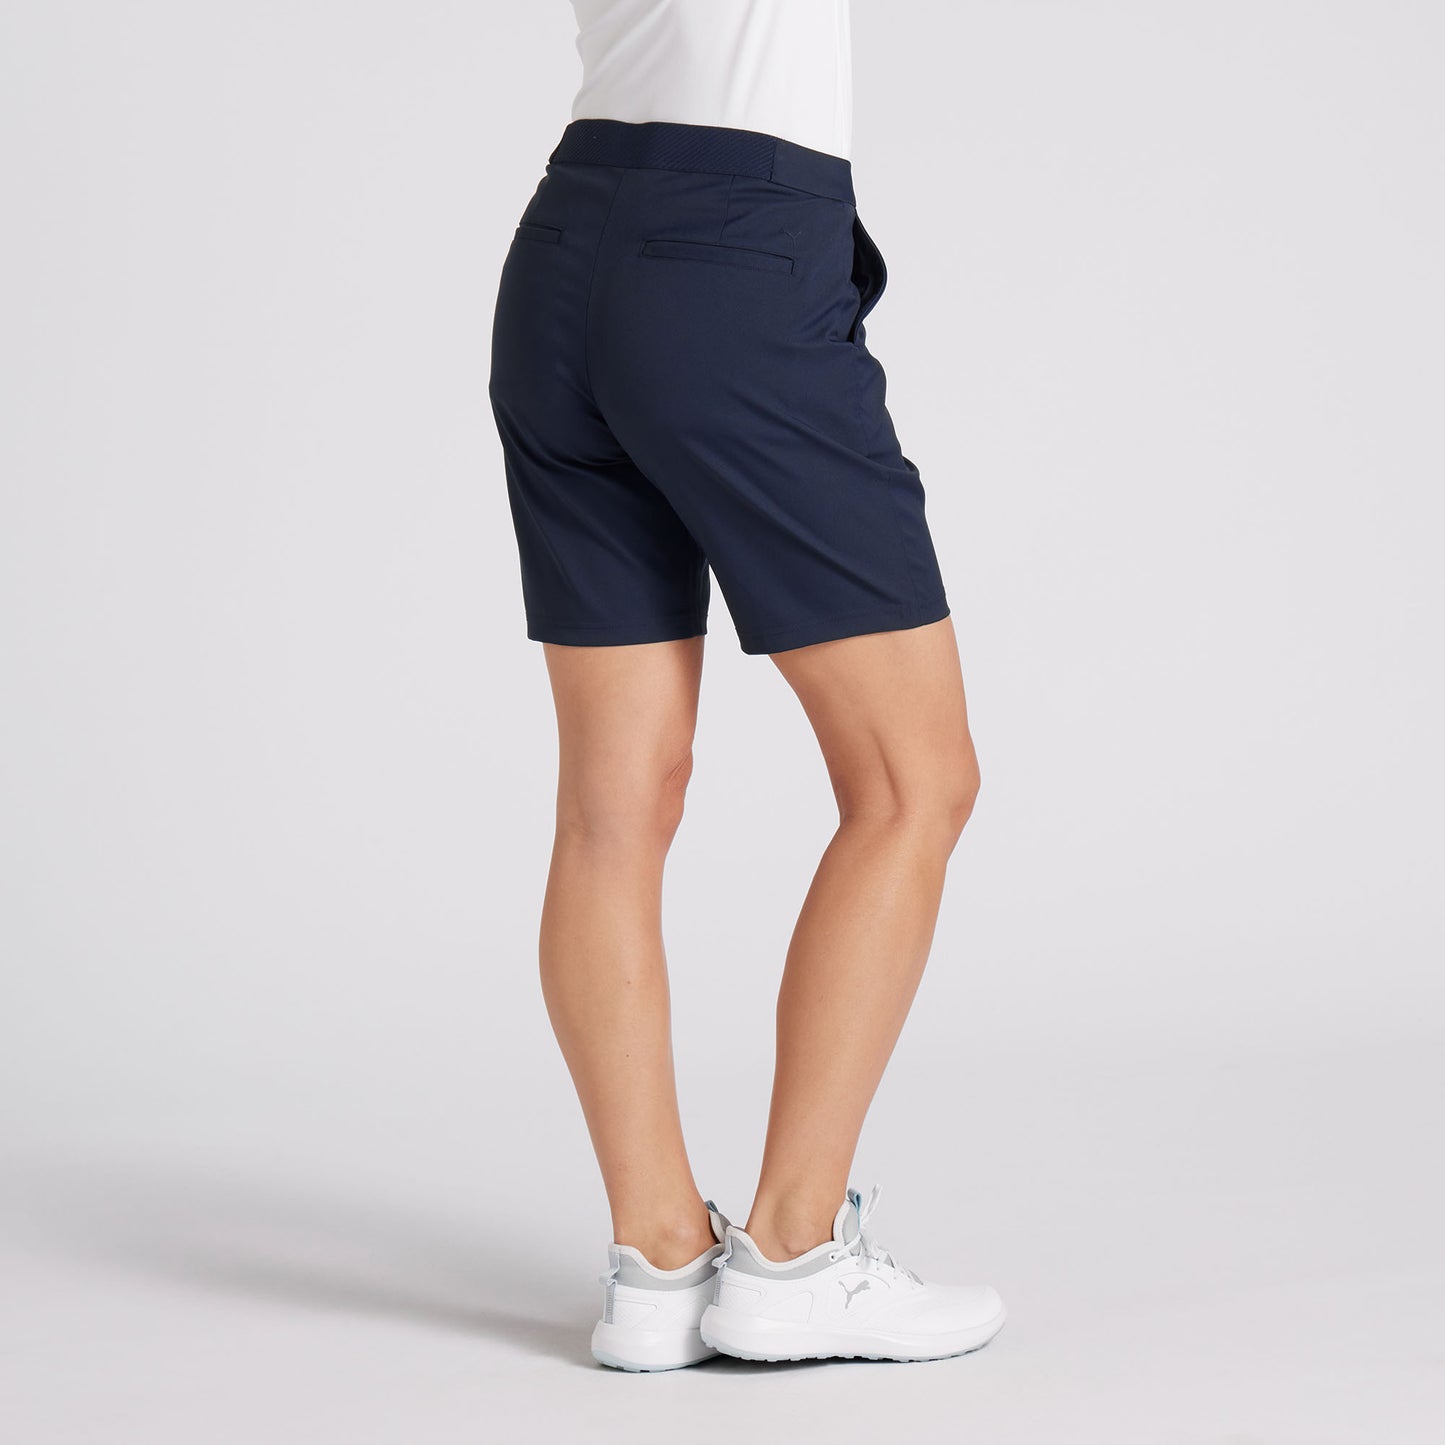 Puma Ladies Deep Navy Slim Fit Shorts with Pintuck Seam